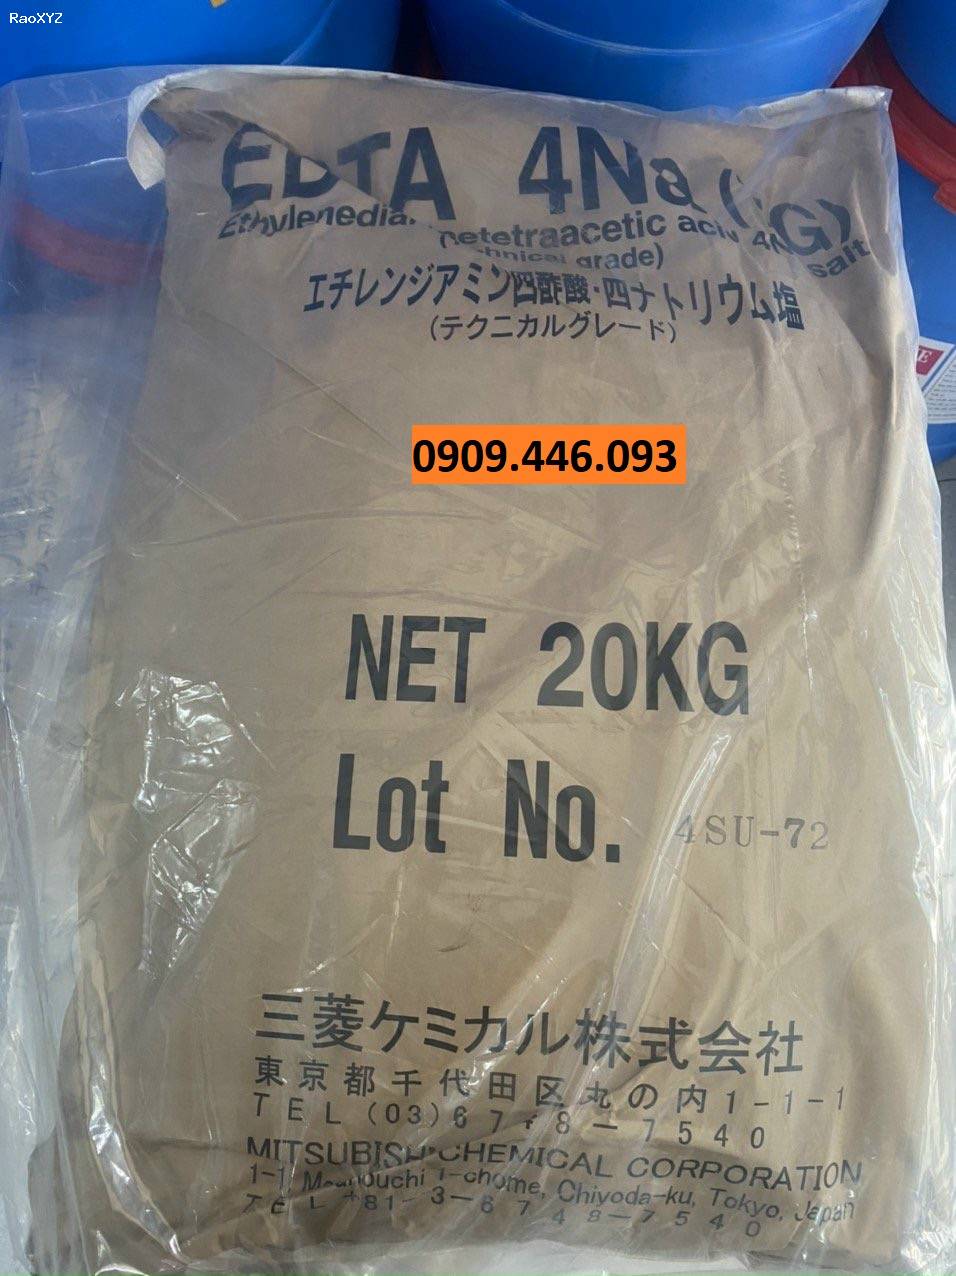 EDTA 2Na - EDTA 2 muối - Ethylendiamin Tetraacetic Acid - Hóa chất xử lý nước cao cấp